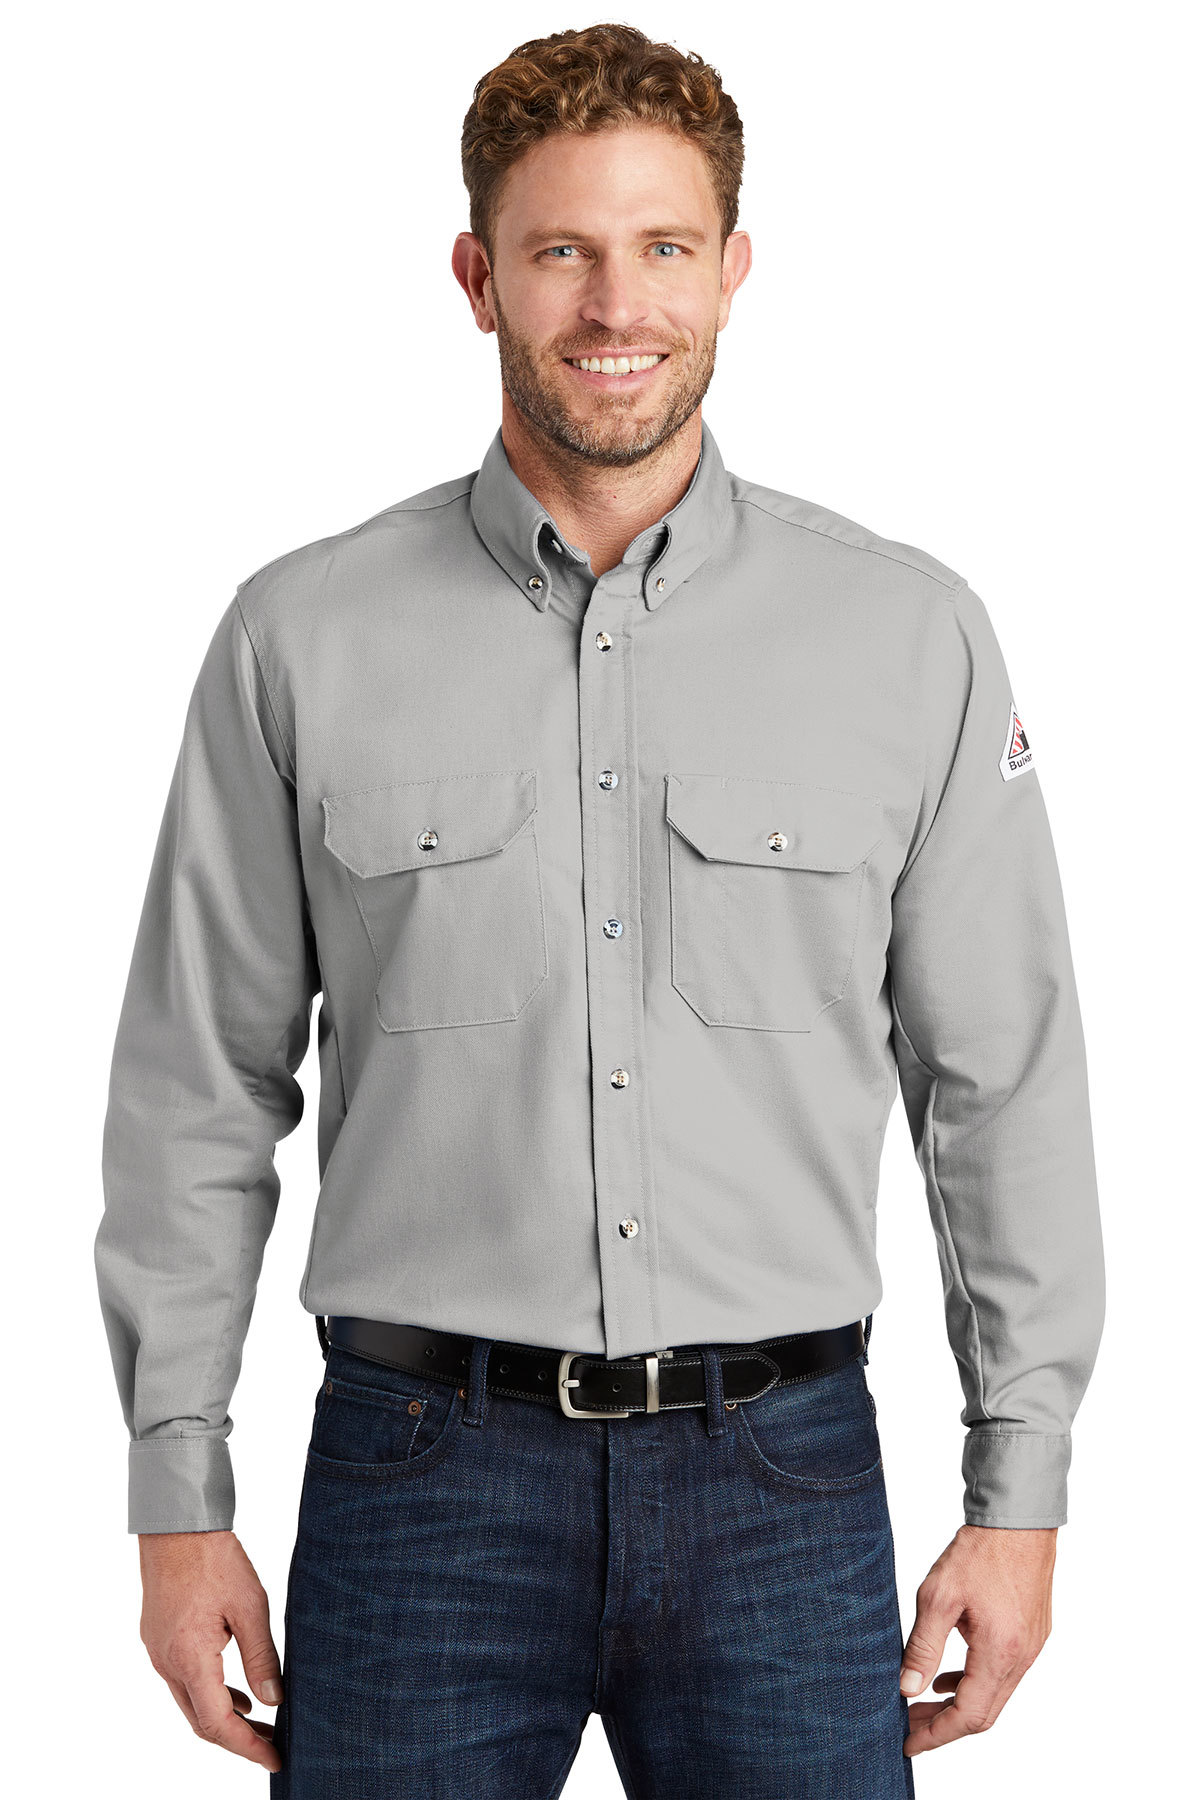 Bulwark EXCEL FR ComforTouch Dress Uniform Shirt | Product | Company ...